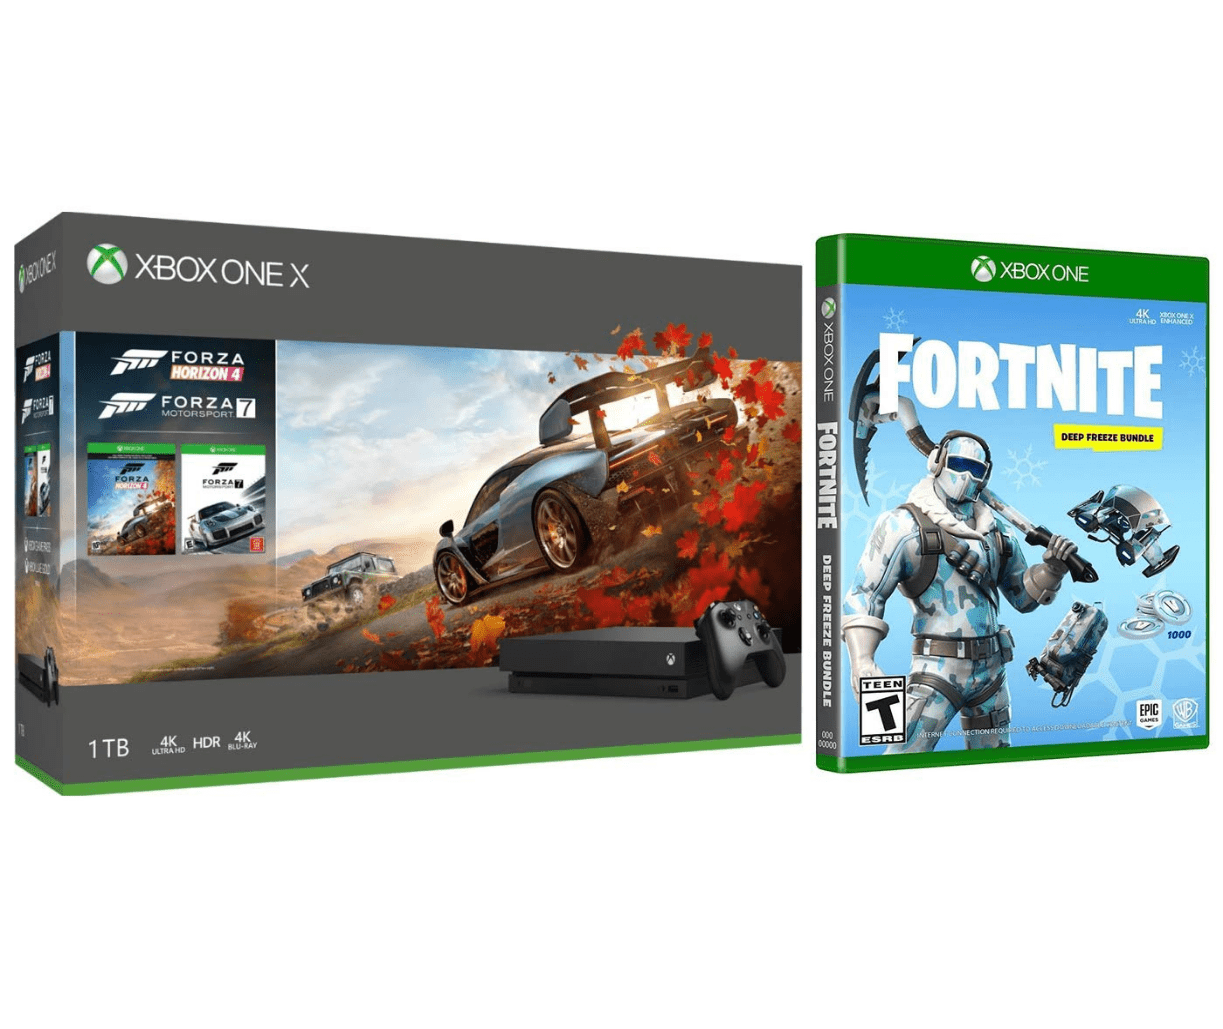  Fortnite: Deep Freeze Bundle (Xbox One) : Video Games